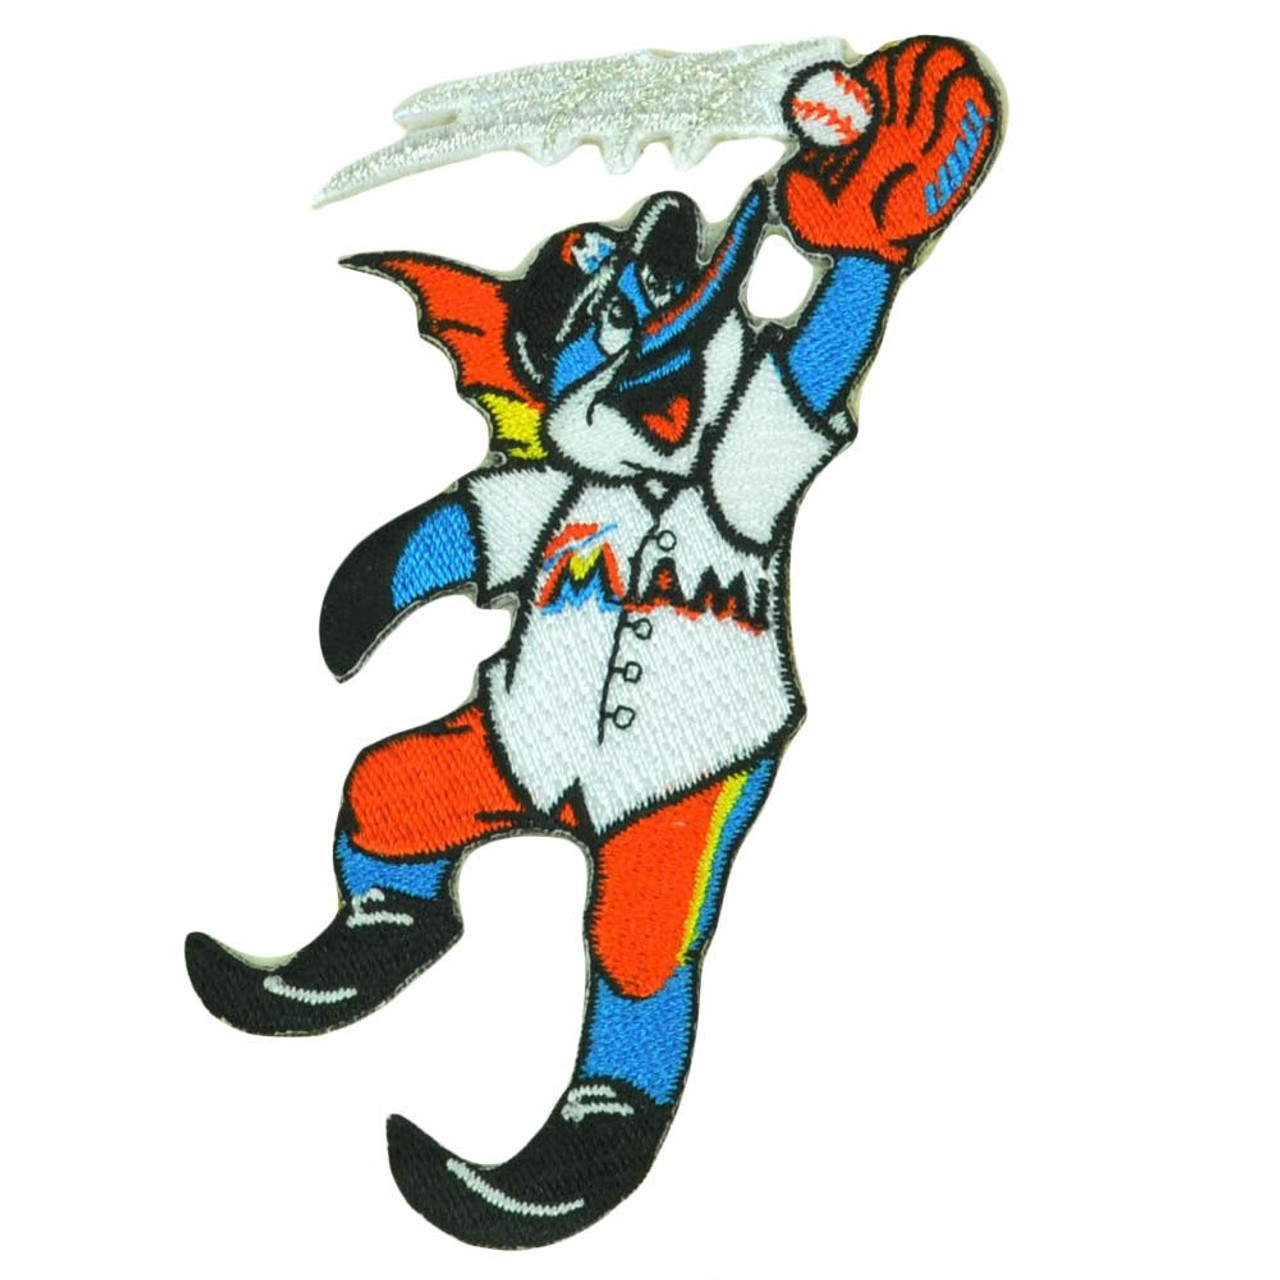 MLB Licensed Miami Marlins Billy The Marlin Baseball Mascot Patch